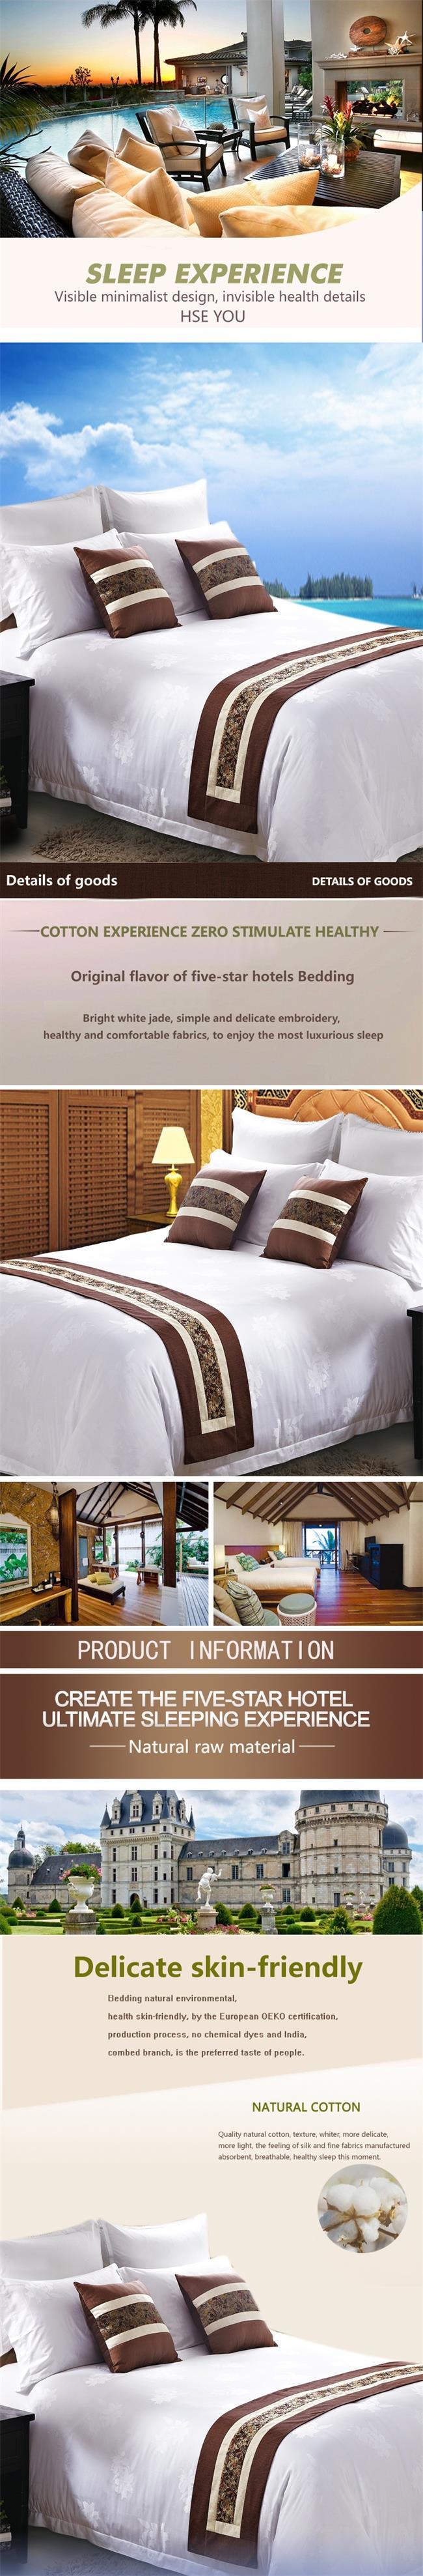 Five Star Hotel Bedding Setshotel Bed Linen Textile Products